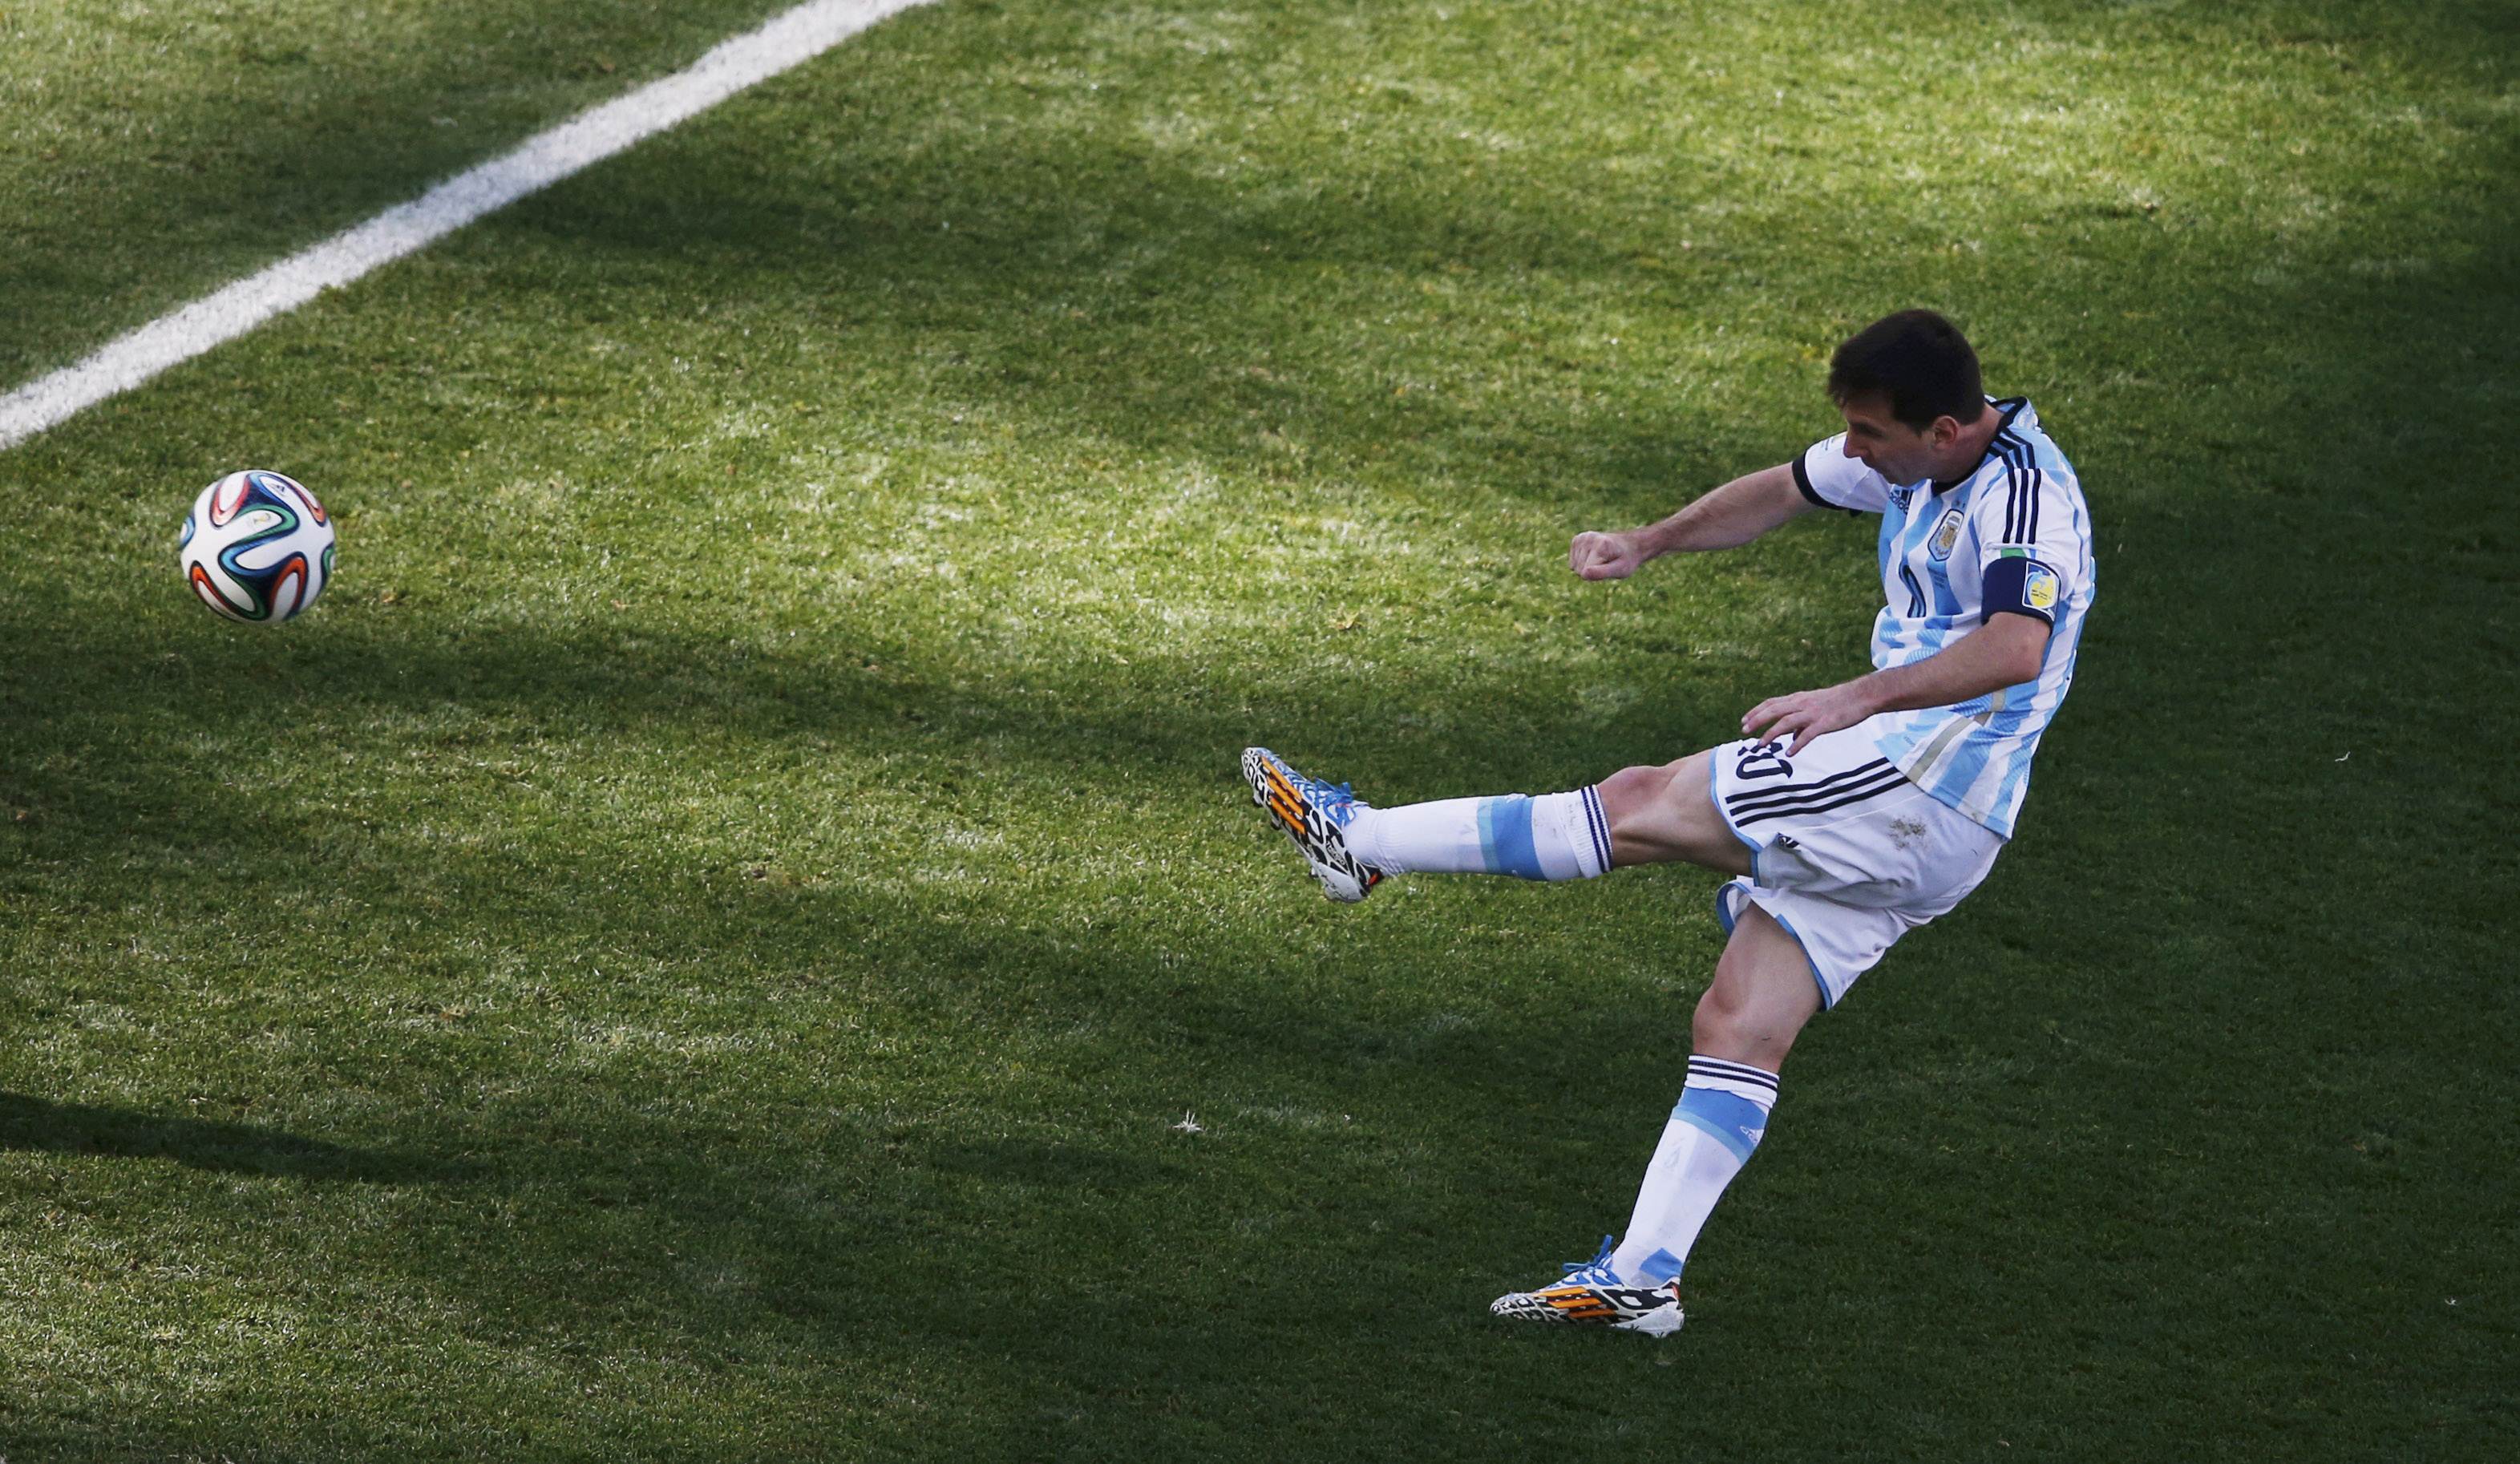 #MundialBrasil2014: Argentina busca romper el embrujo de cuartos de final